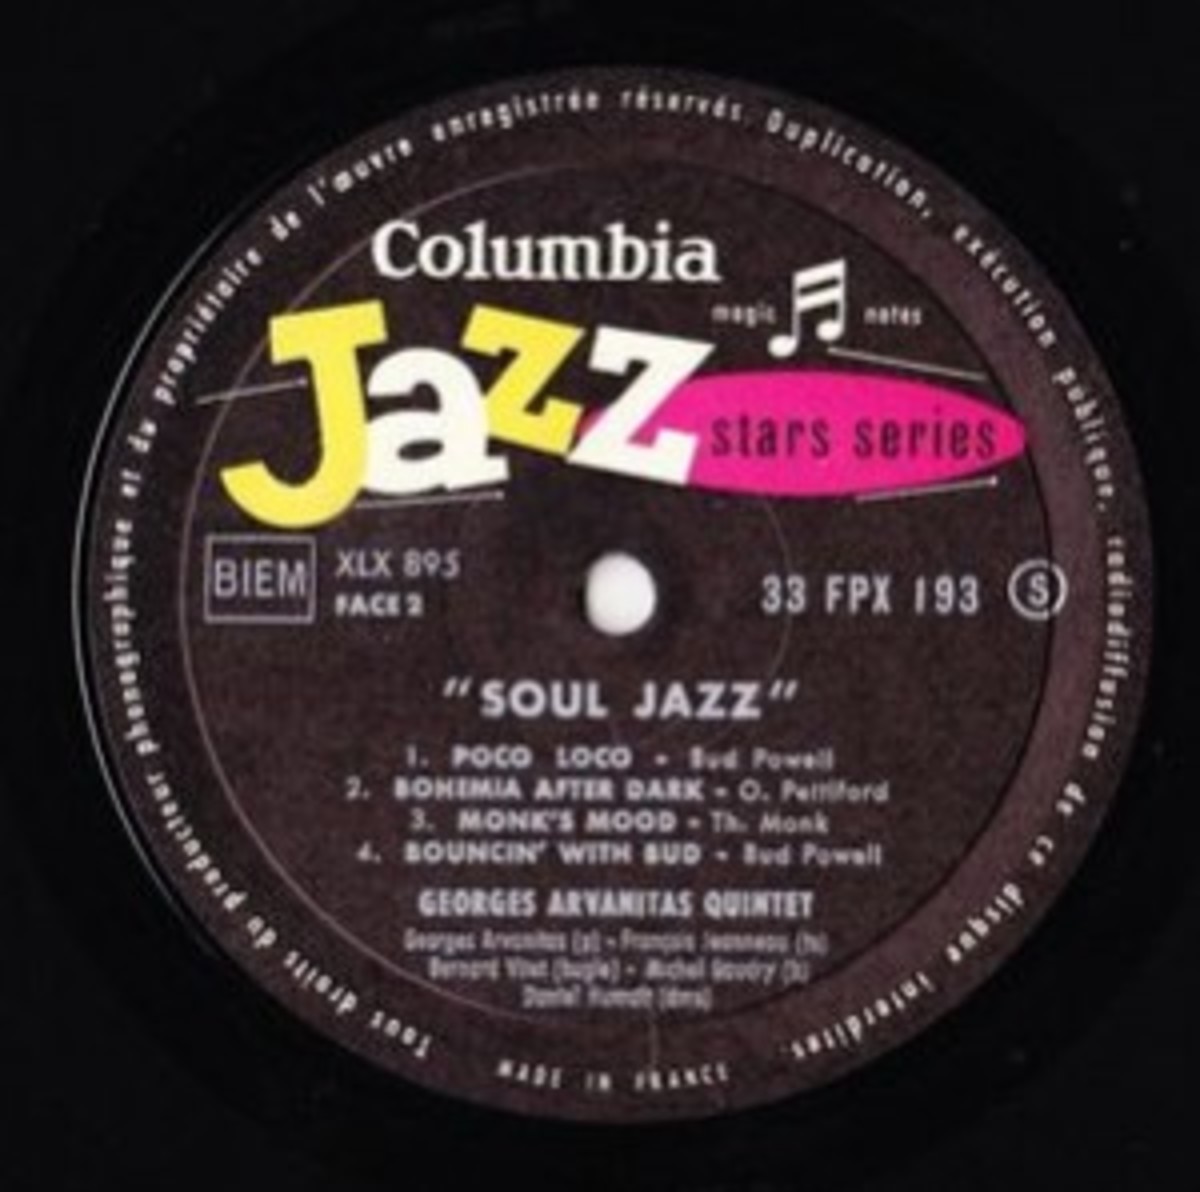 Georges Arvanitas Quintet Soul Jazz